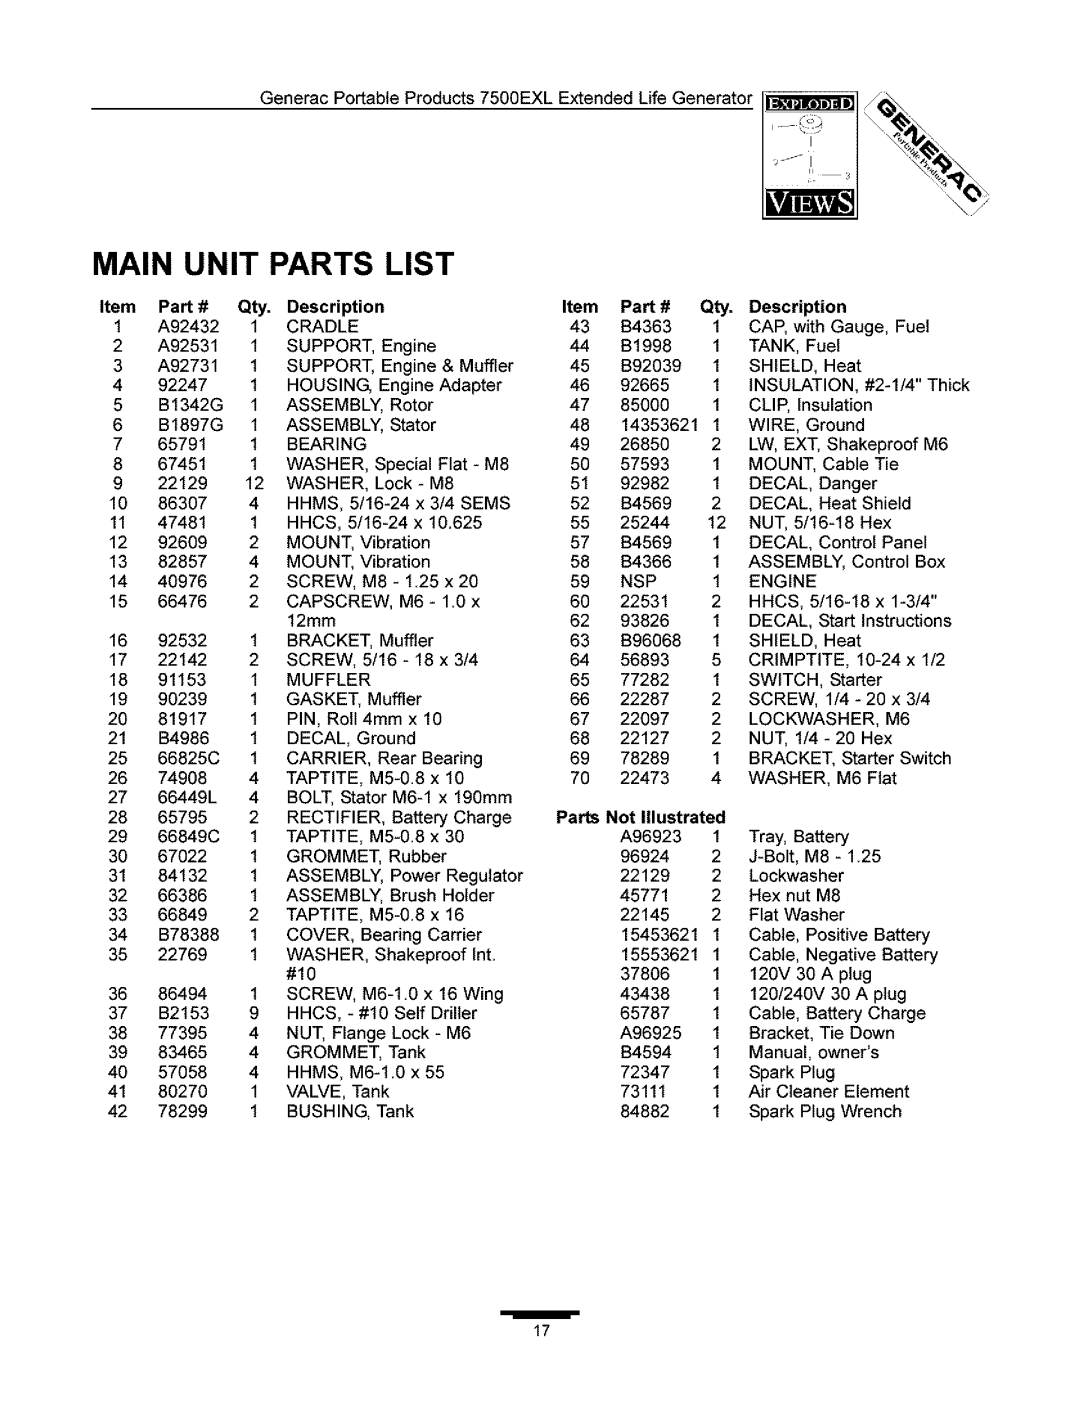 Generac 7500 owner manual Main Unit Parts List 